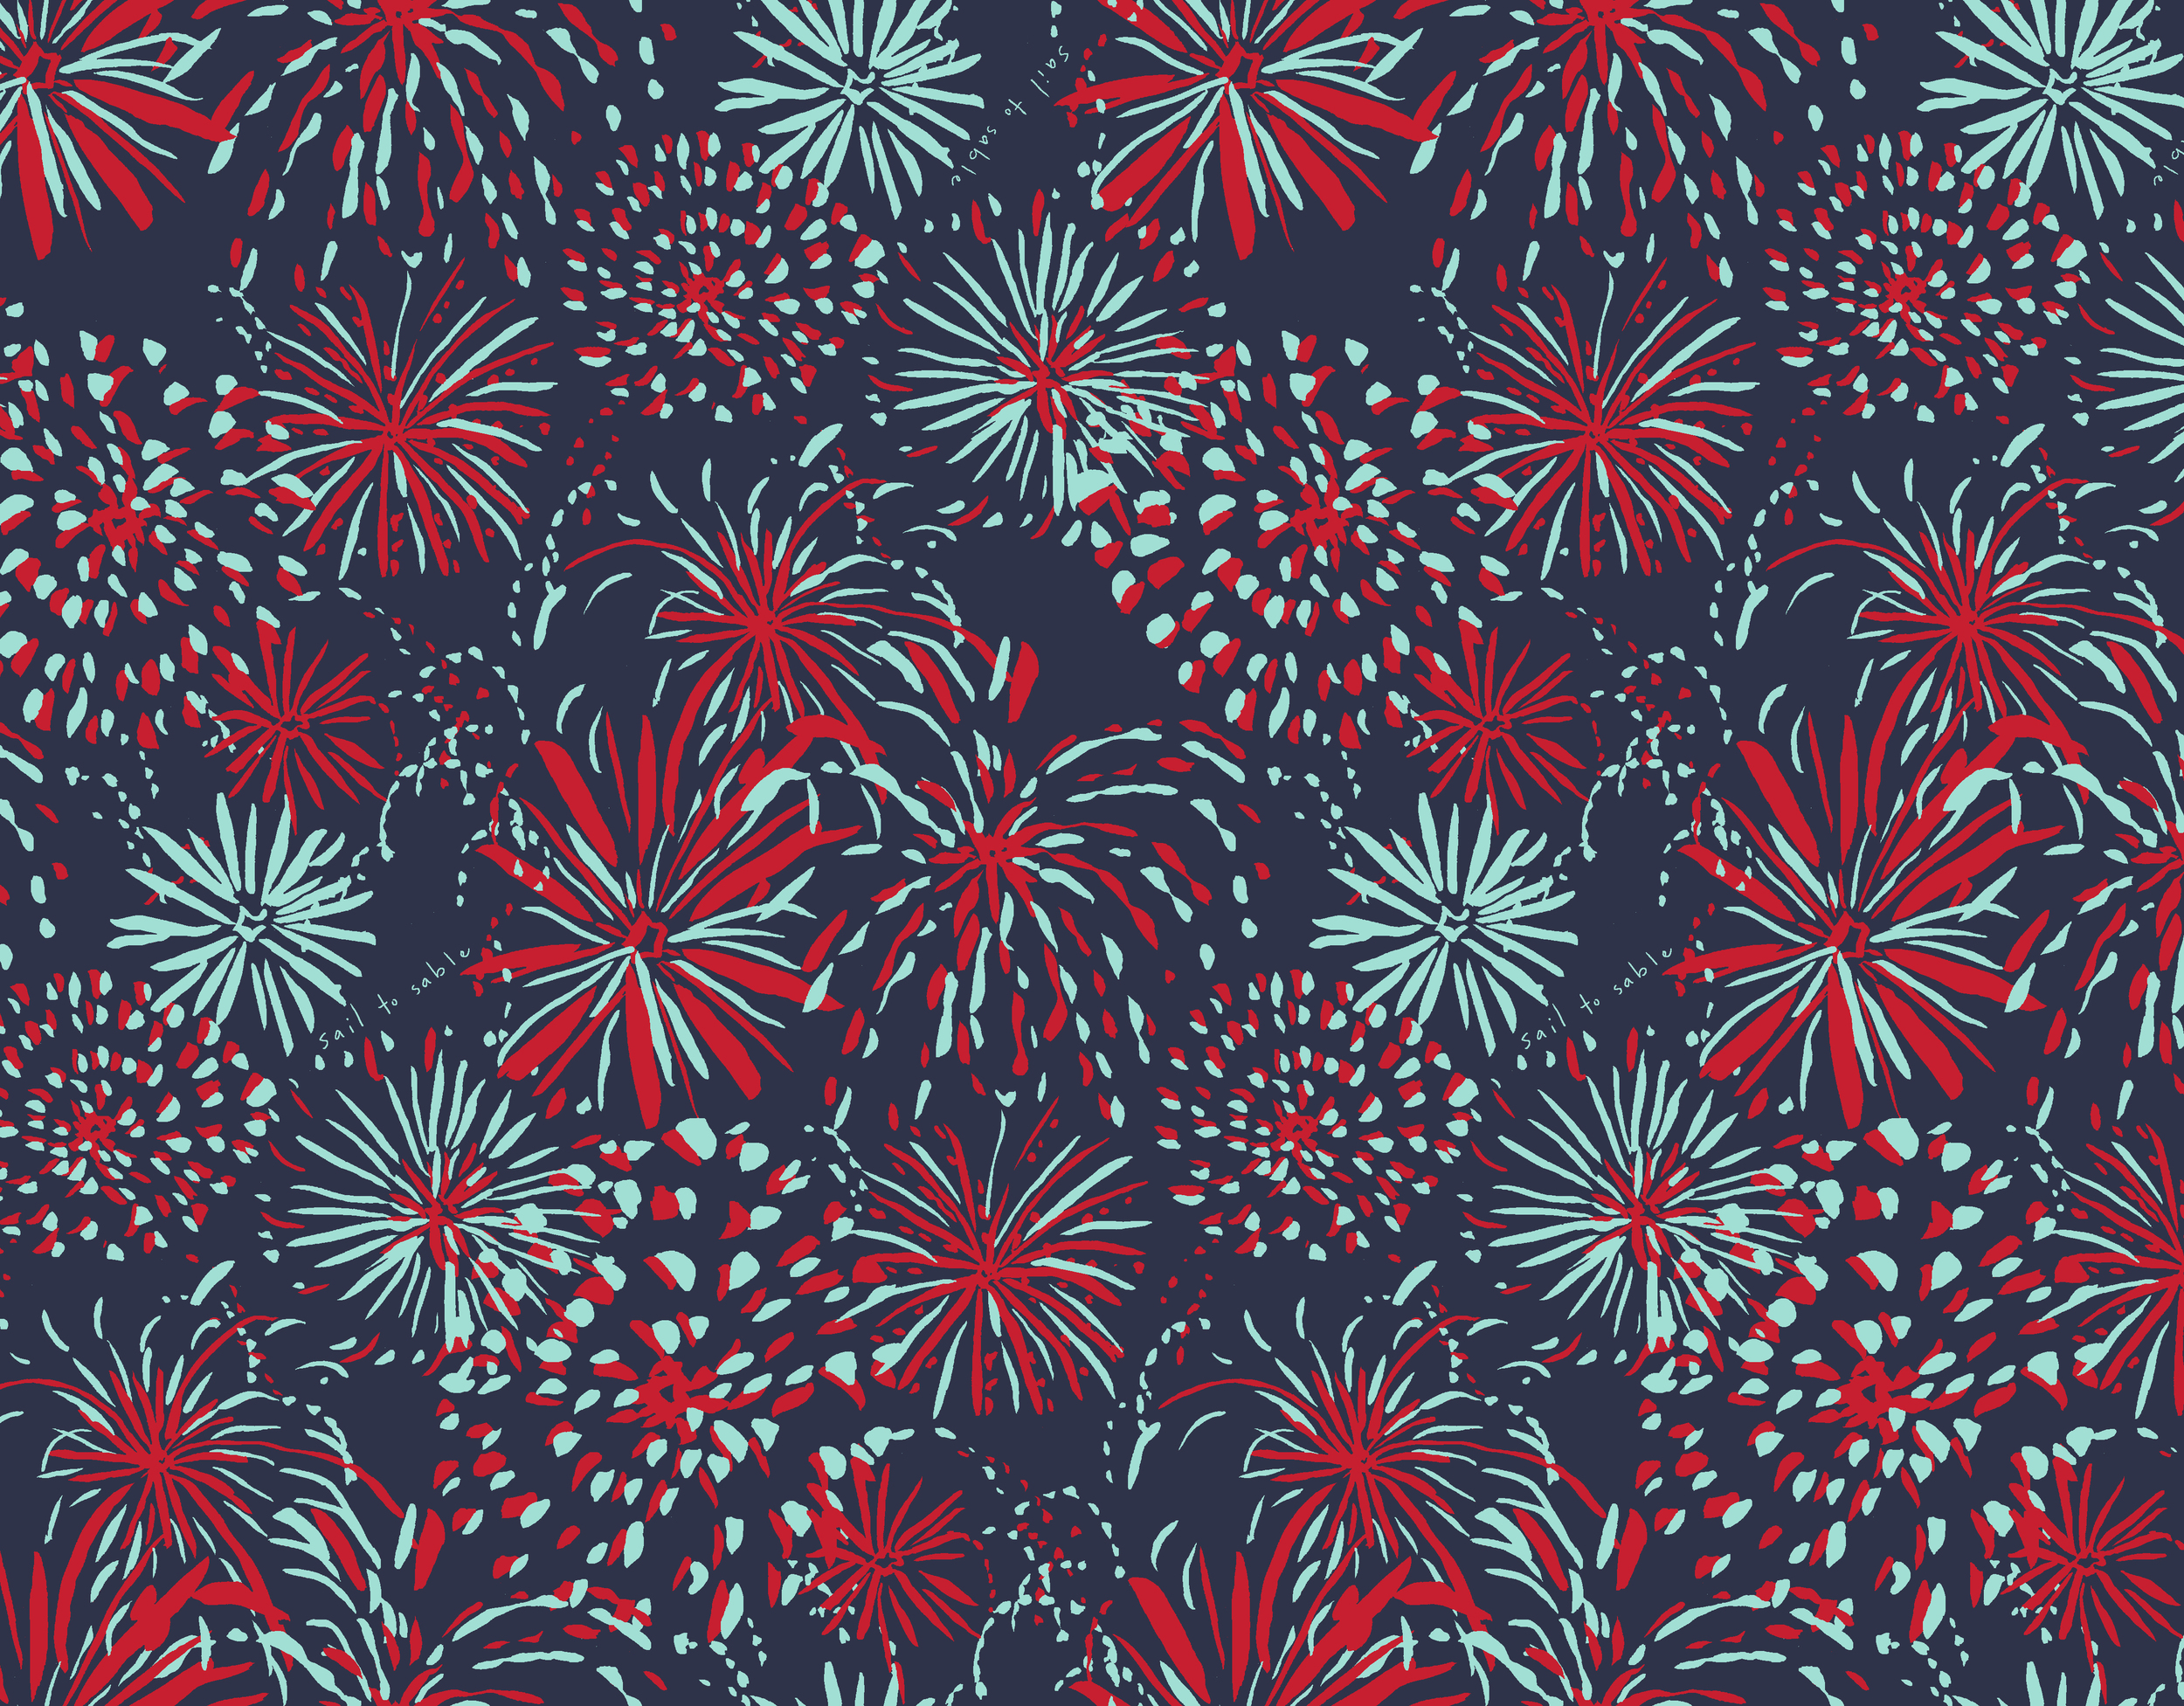 Sail to Sable S16 Fireworks Print